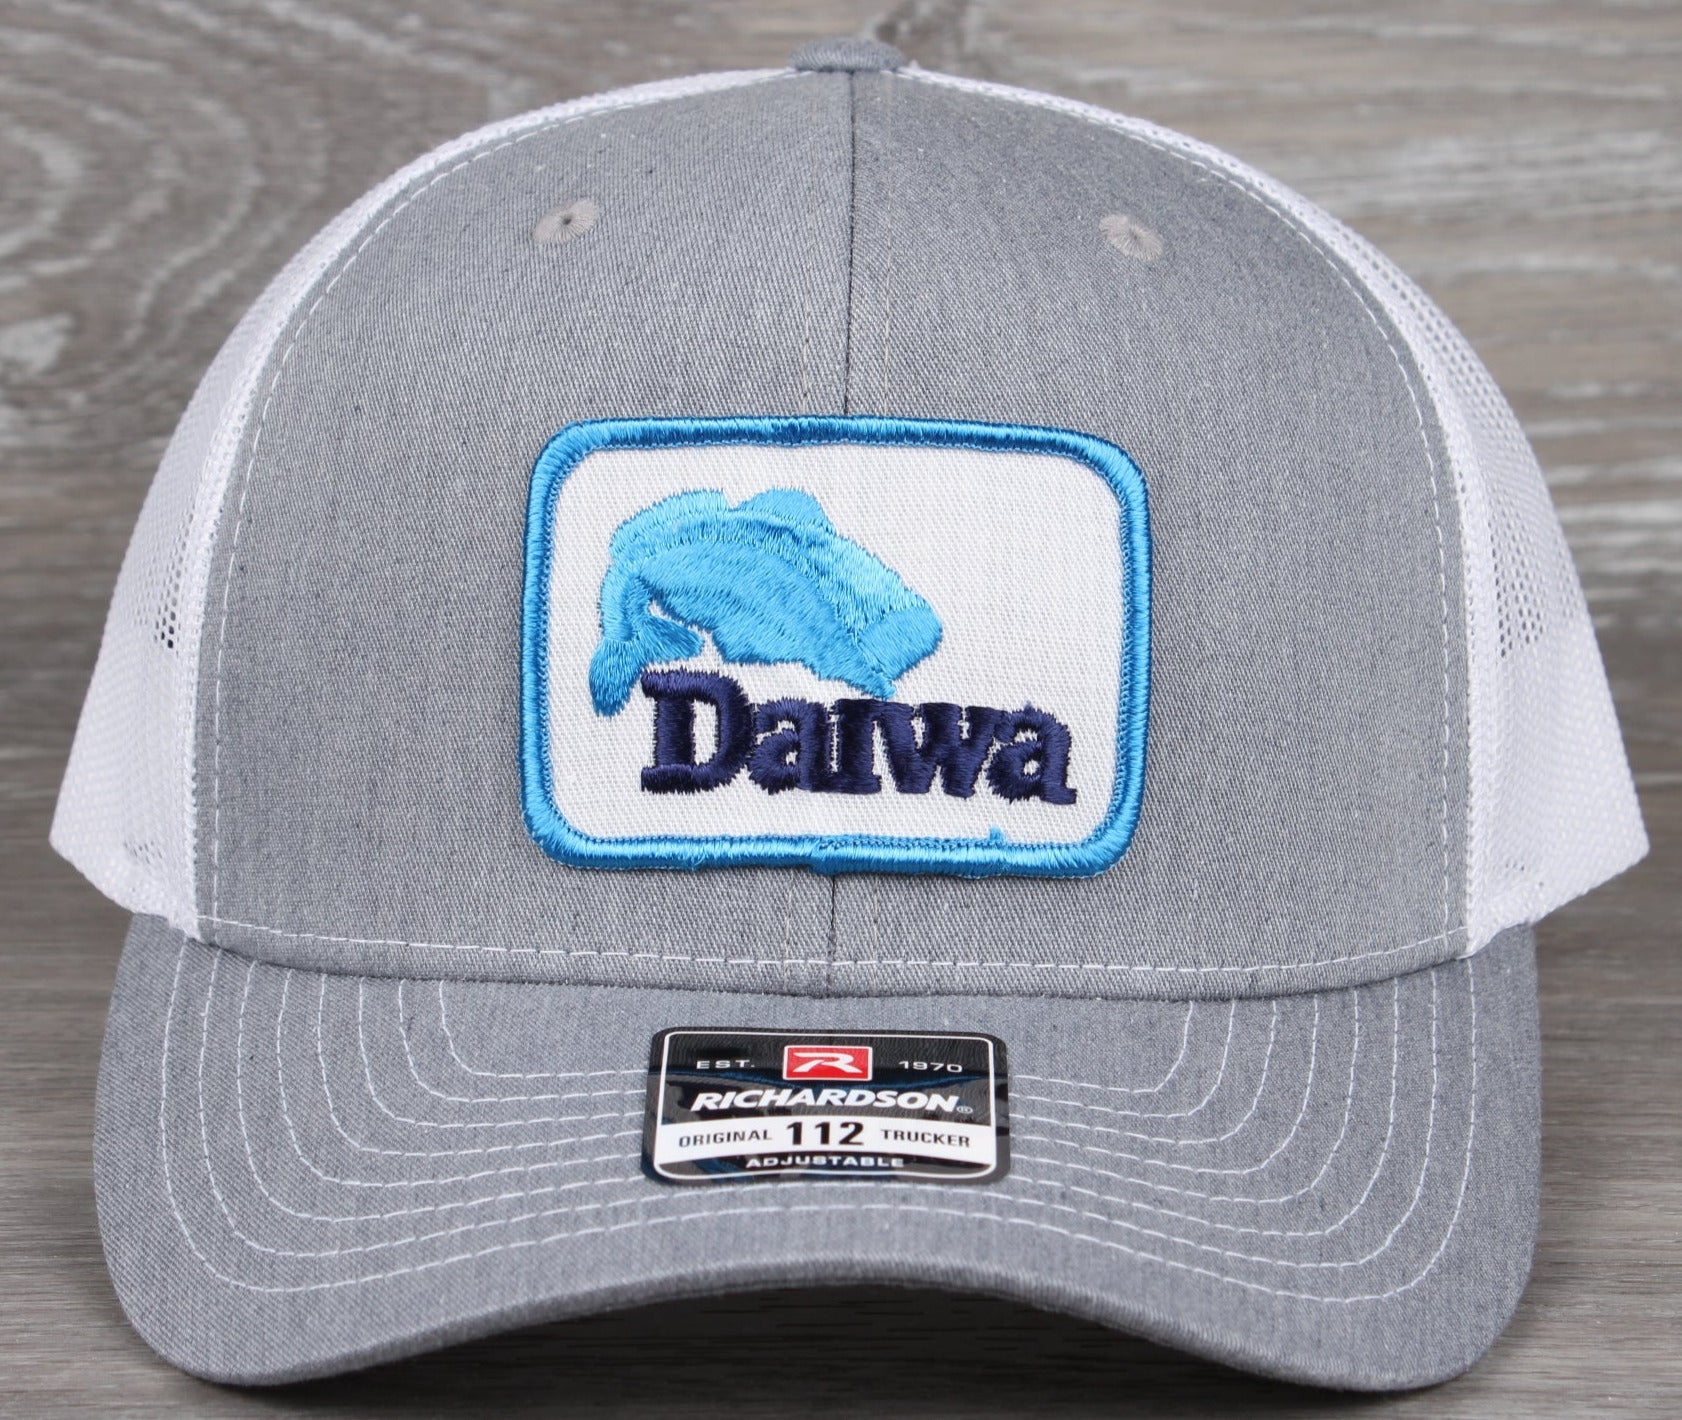 Daiwa Fishing Hats & Headwear for sale